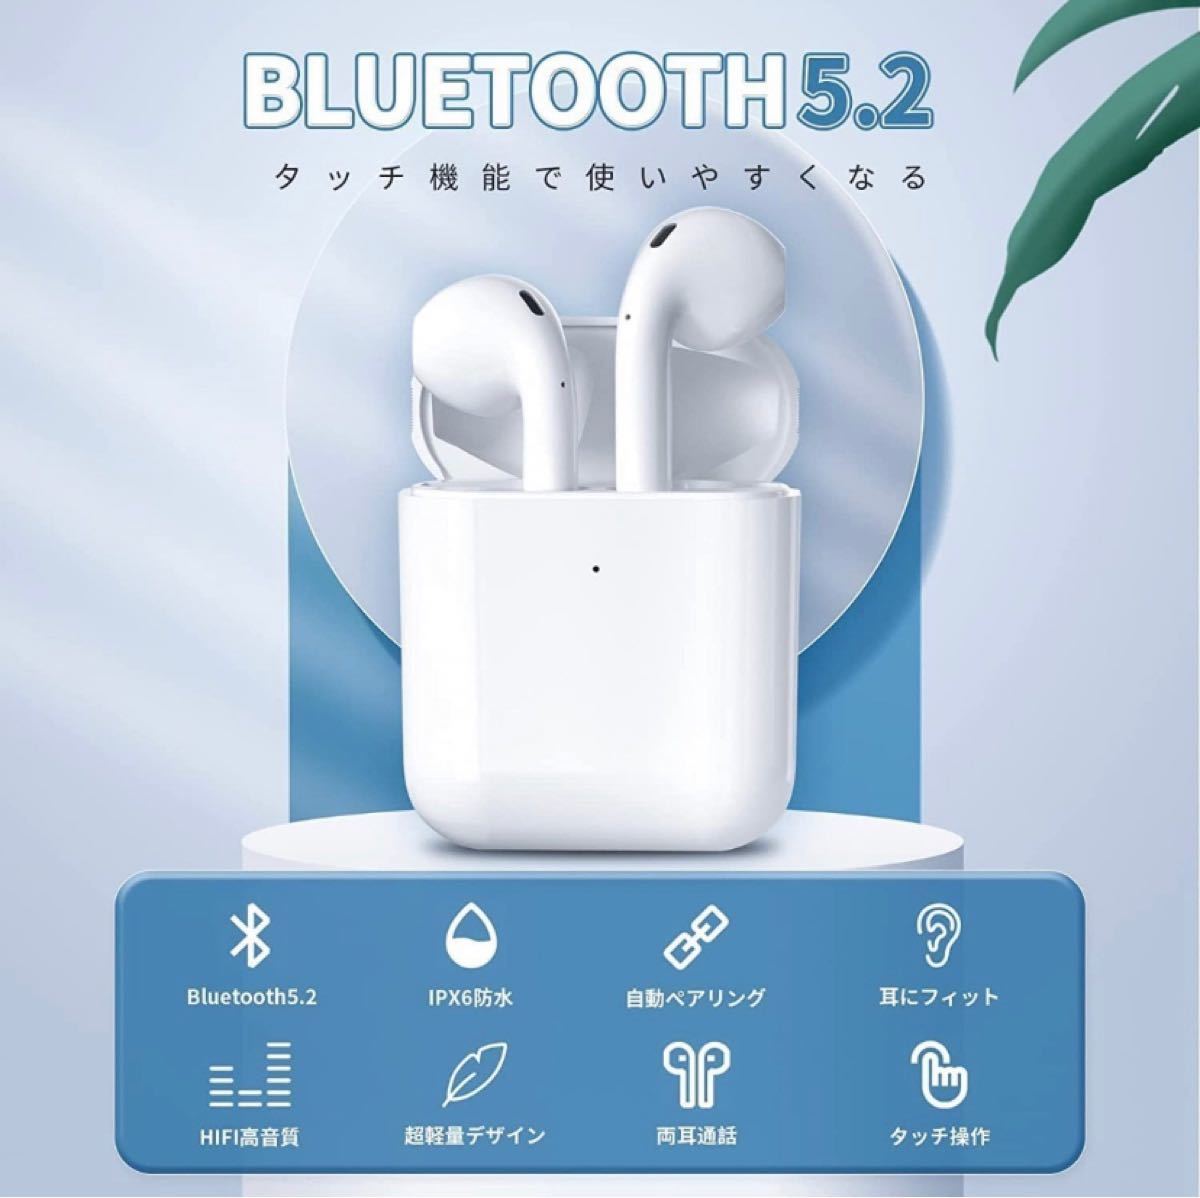 【Bluetooth5.2 瞬間接続】 完全ワイヤレスイヤホン Hi-FiEDR搭載 左右分離型 音量調整 マイク内蔵